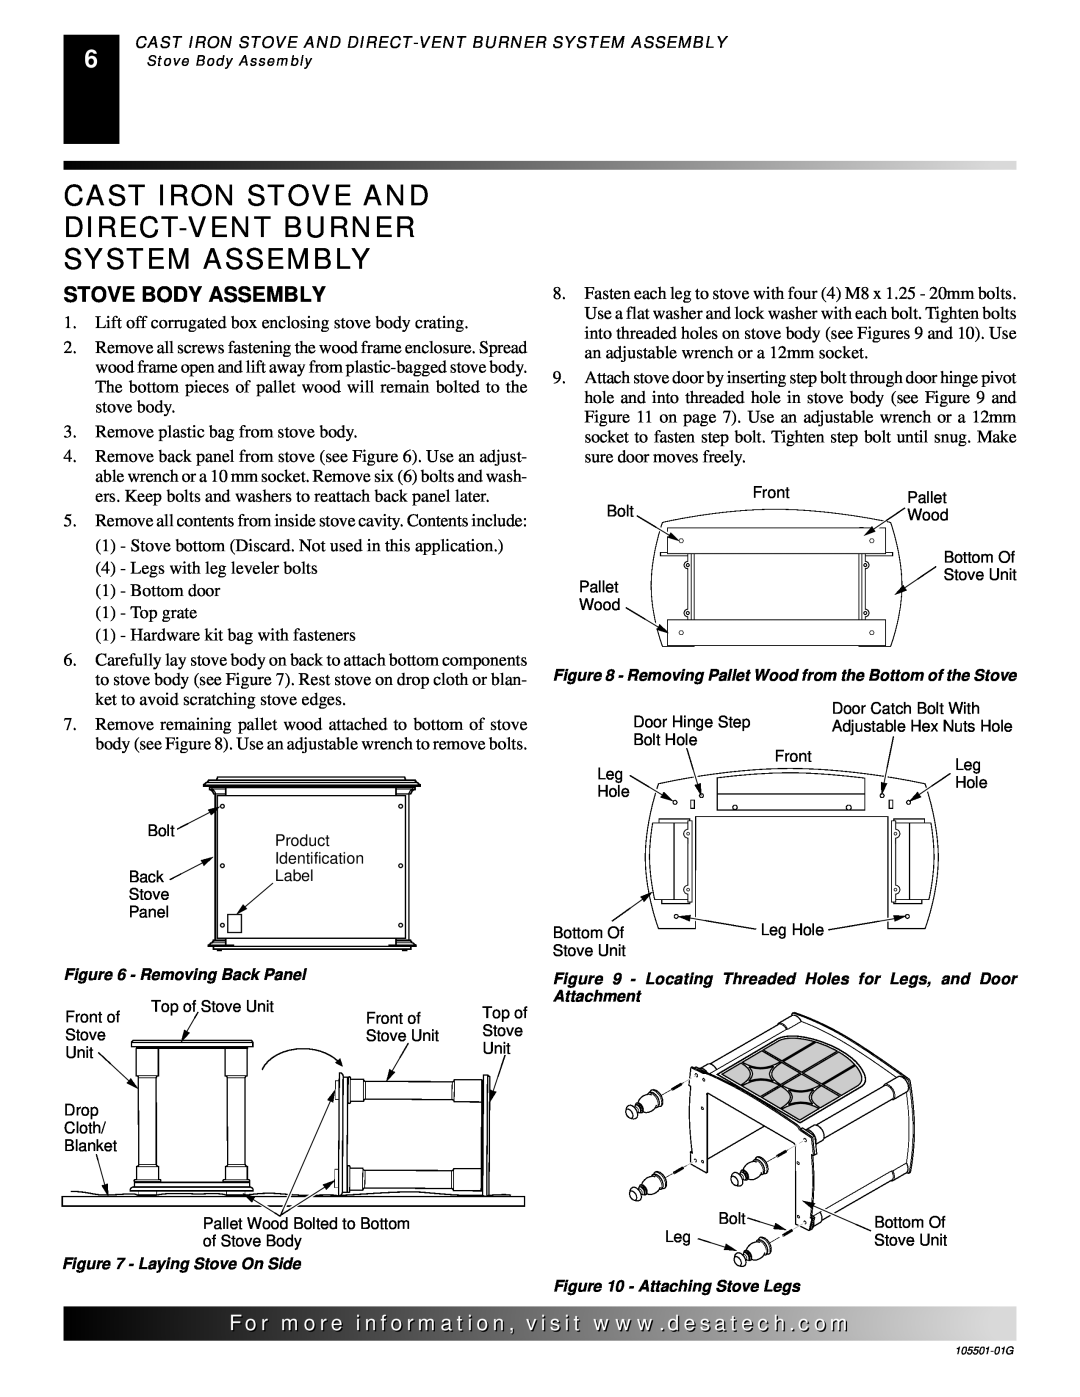 Desa Tech CDVBNC, CDVBPC manual Cast Iron Stove And Direct-Vent Burner System Assembly, Stove Body Assembly, For..com 